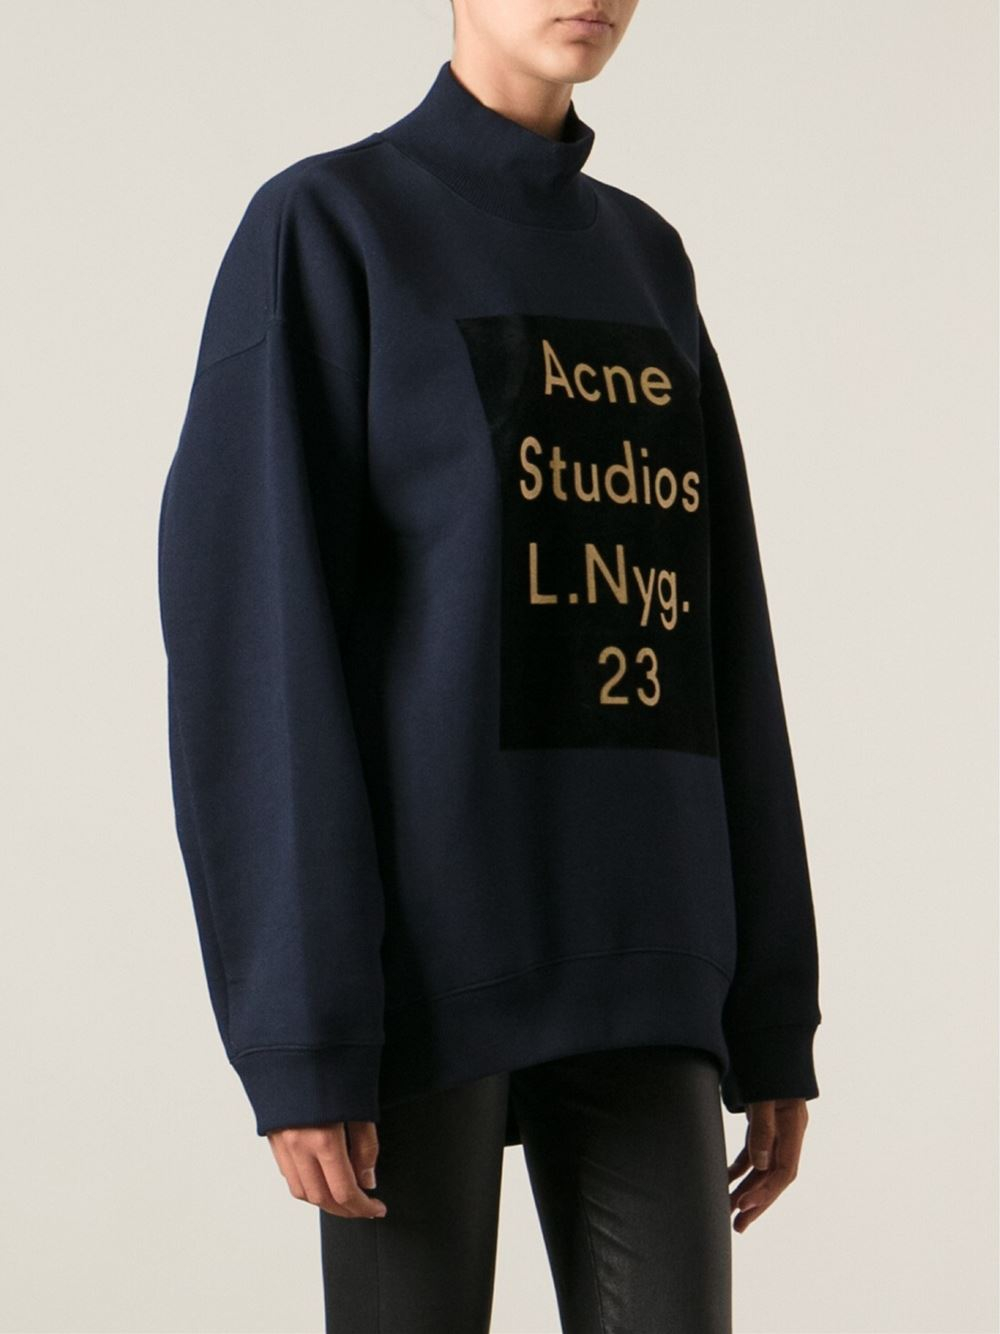 Acne Studios Beta Flock Sweater in Blue - Lyst